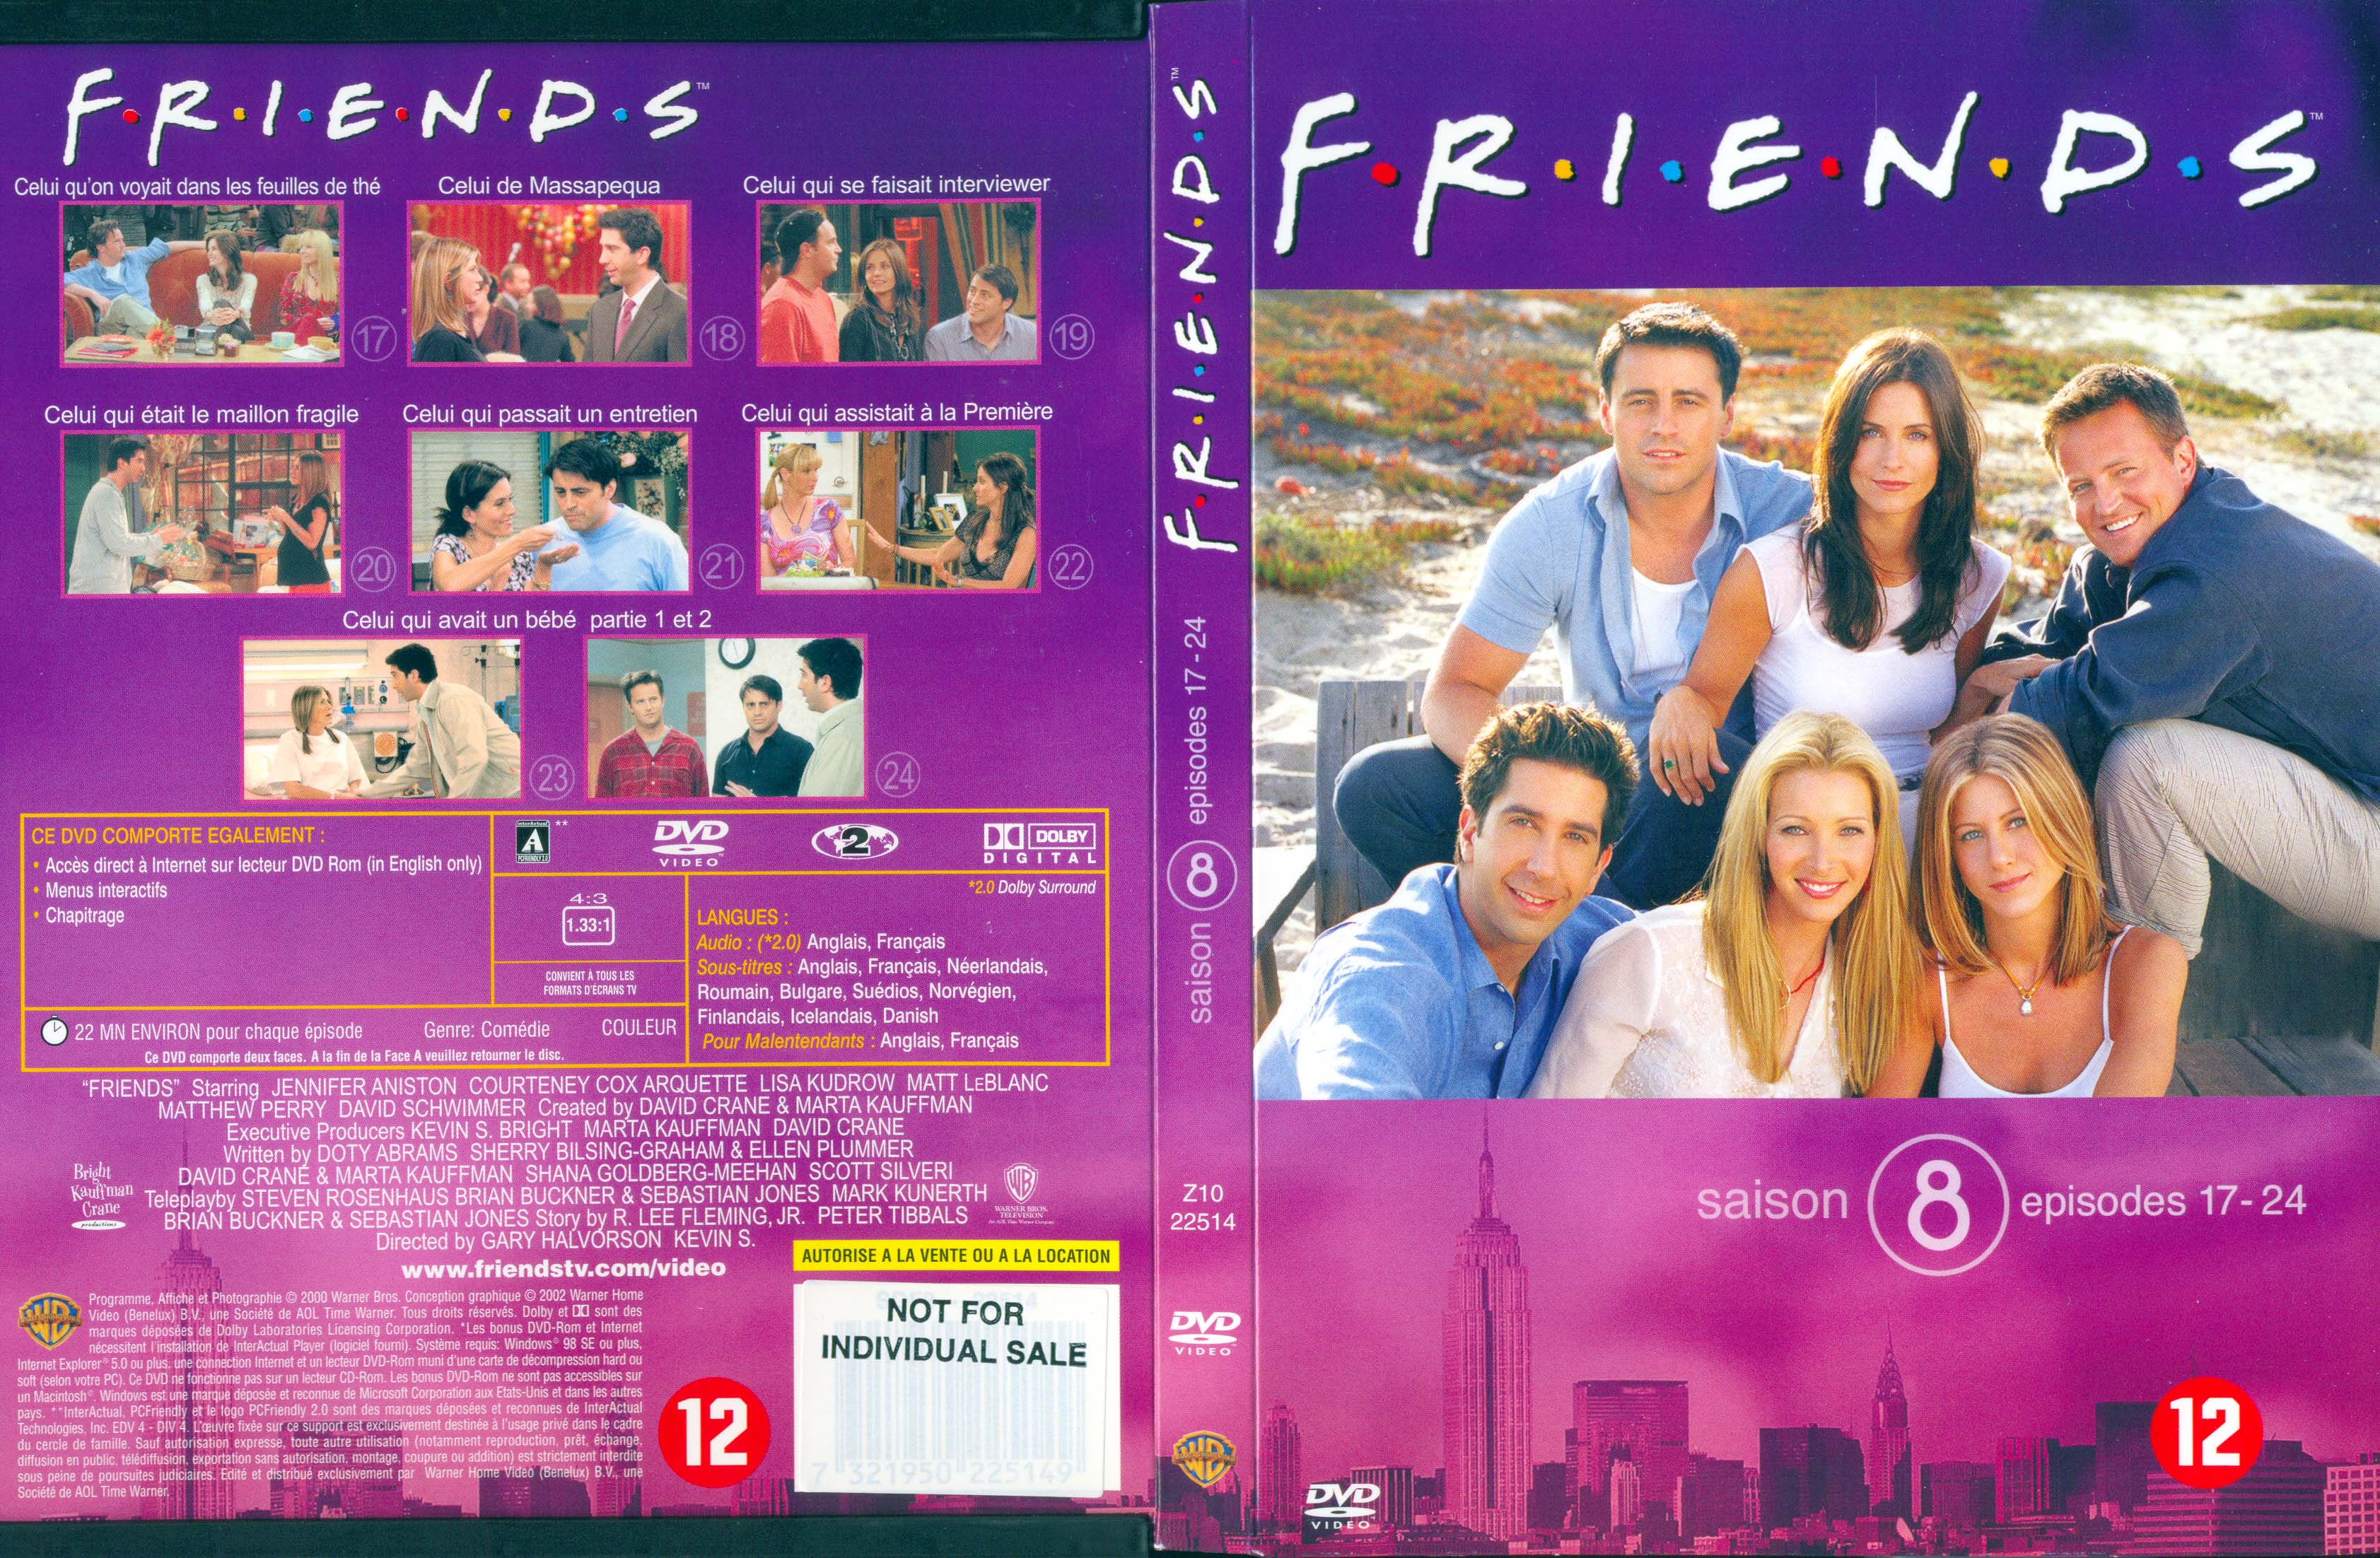 Jaquette DVD Friends saison 8 dvd 3